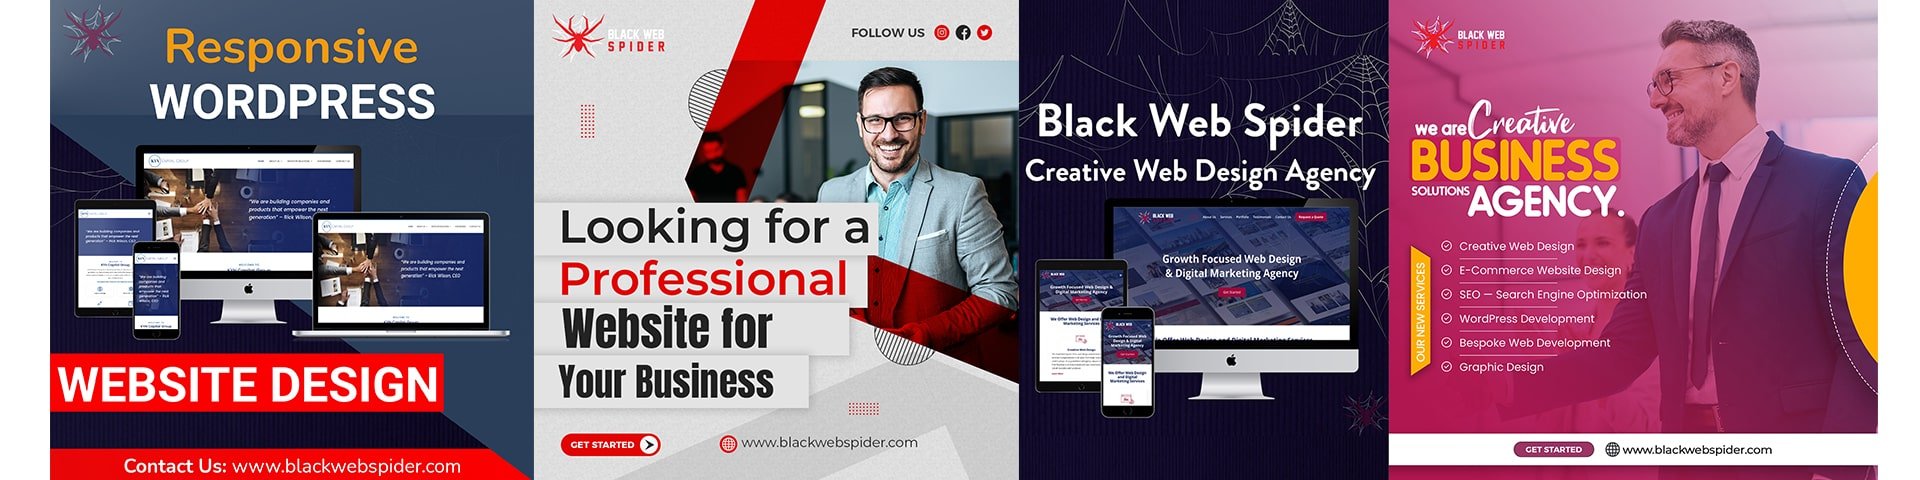 Black Web Spider - Web Design Agency cover